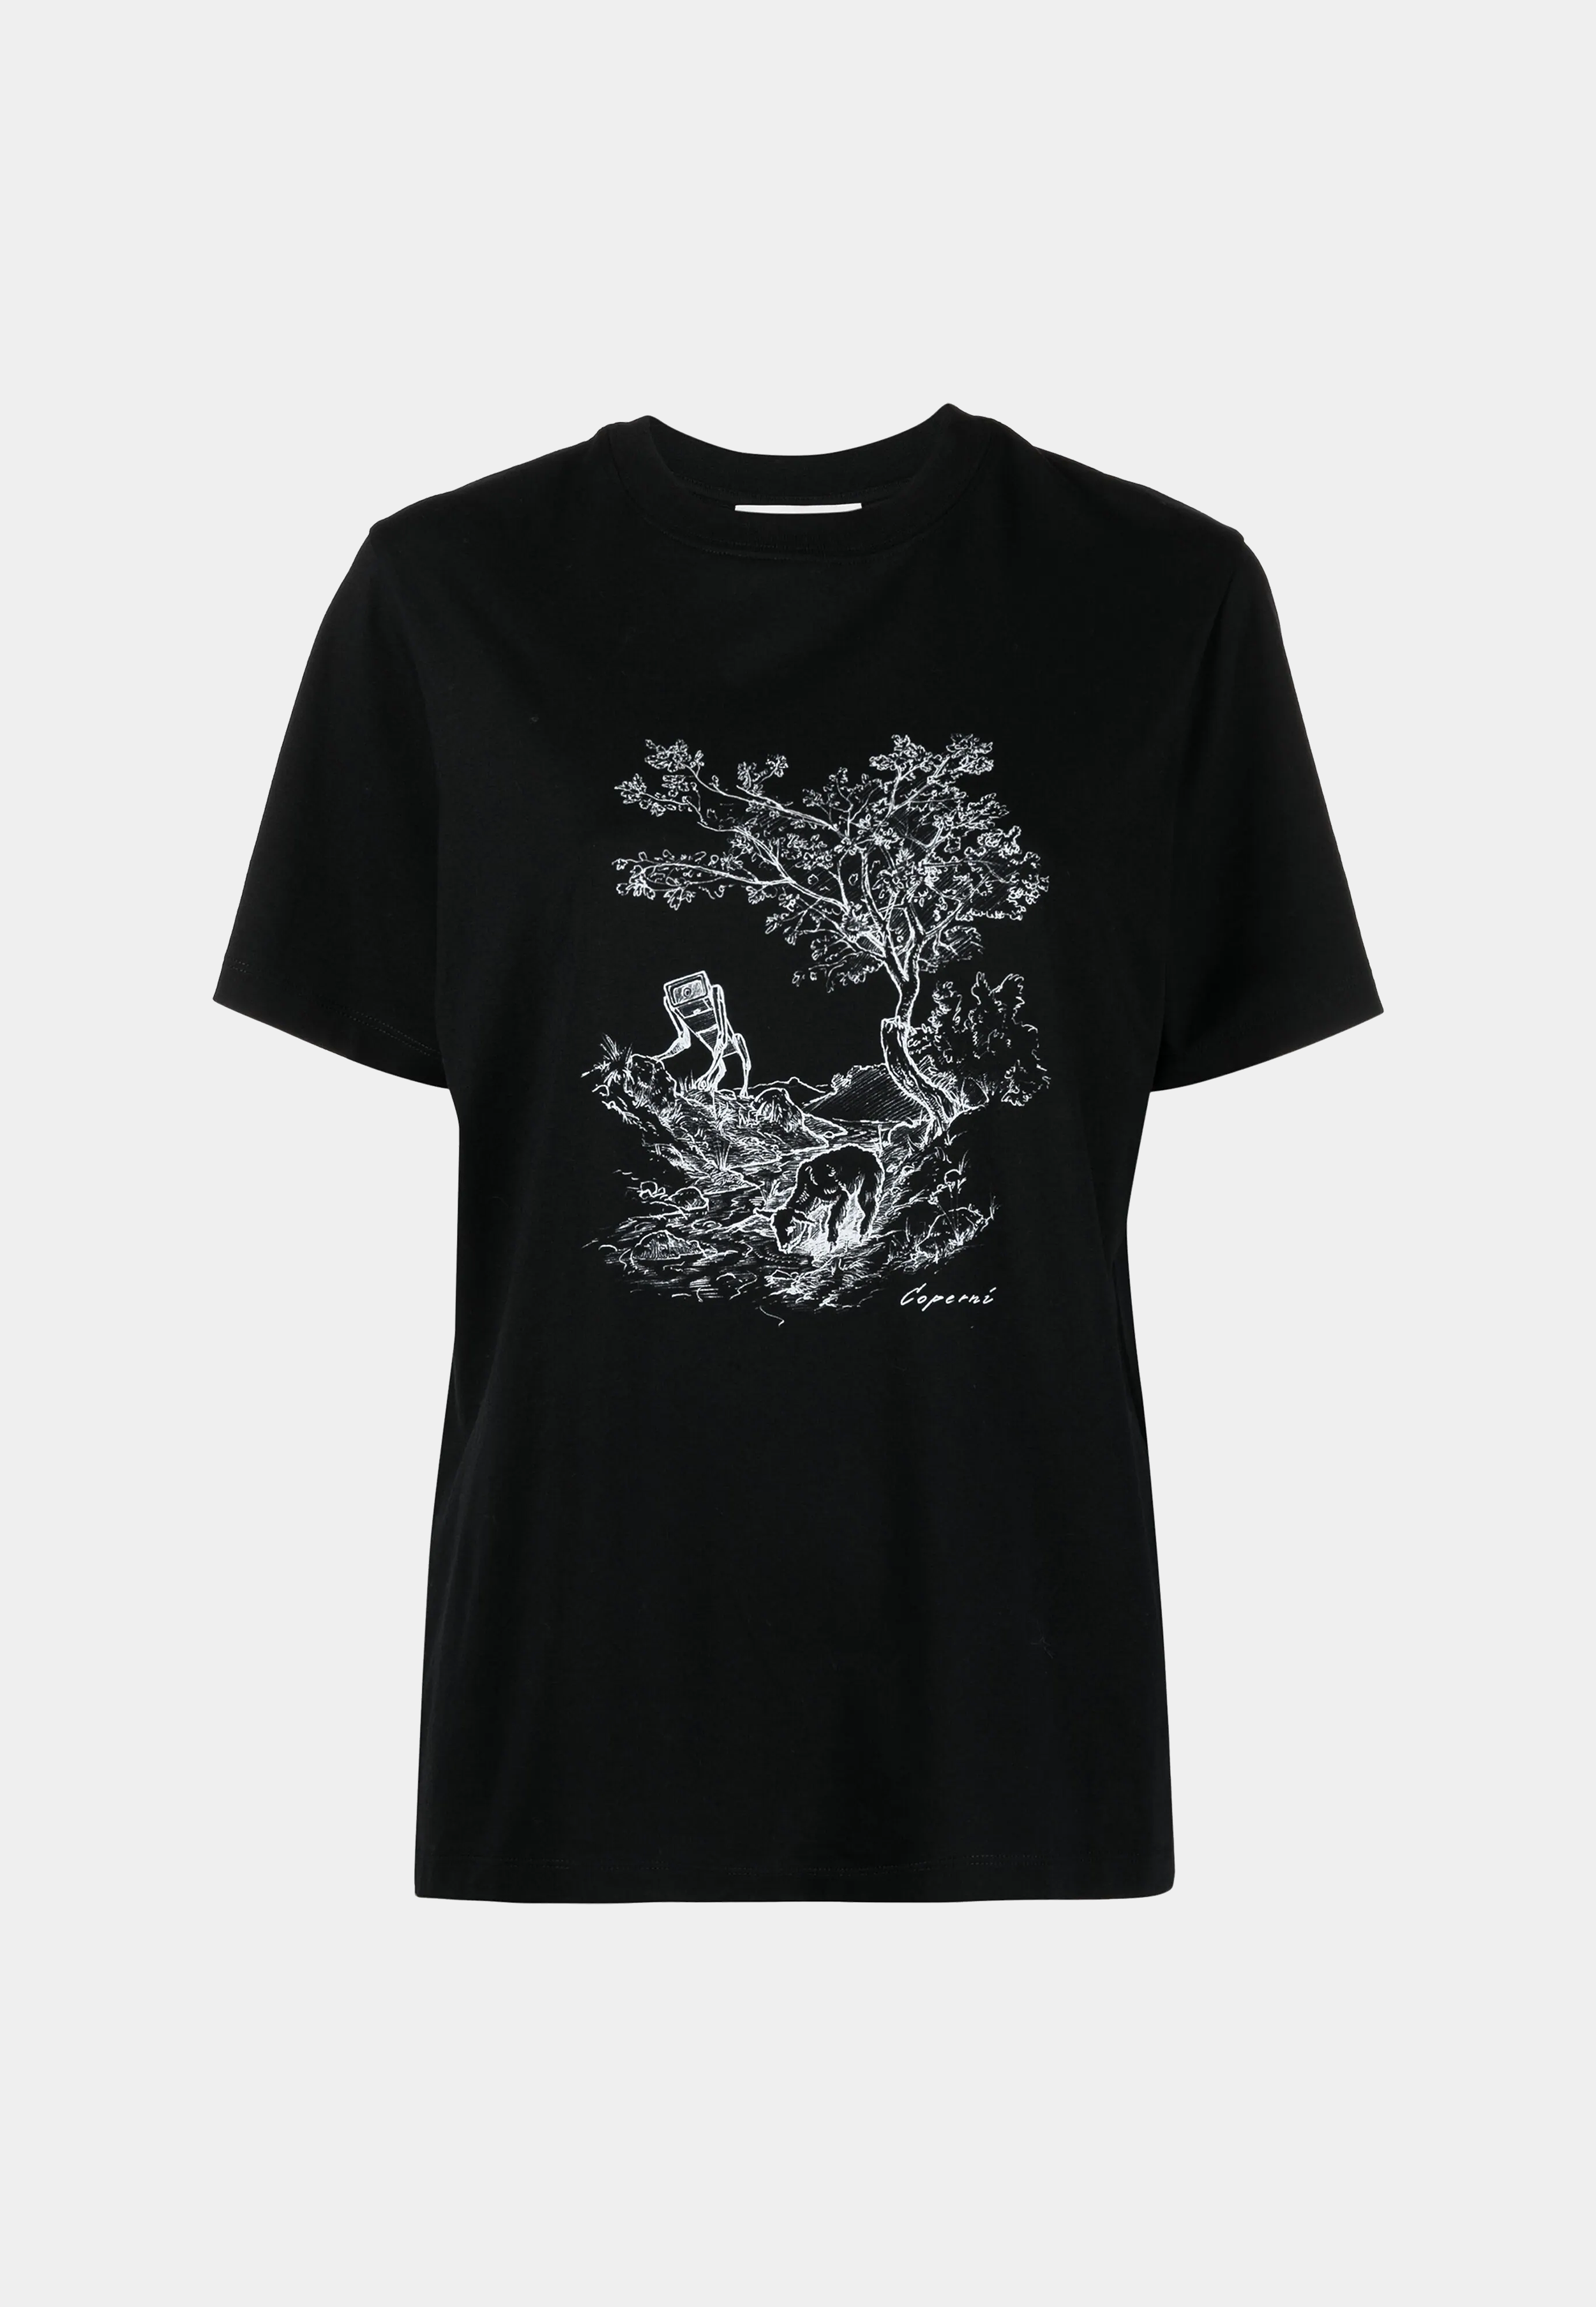 Coperni Toile De Jouy Print Logo Boxy T-Shirt - Black/White